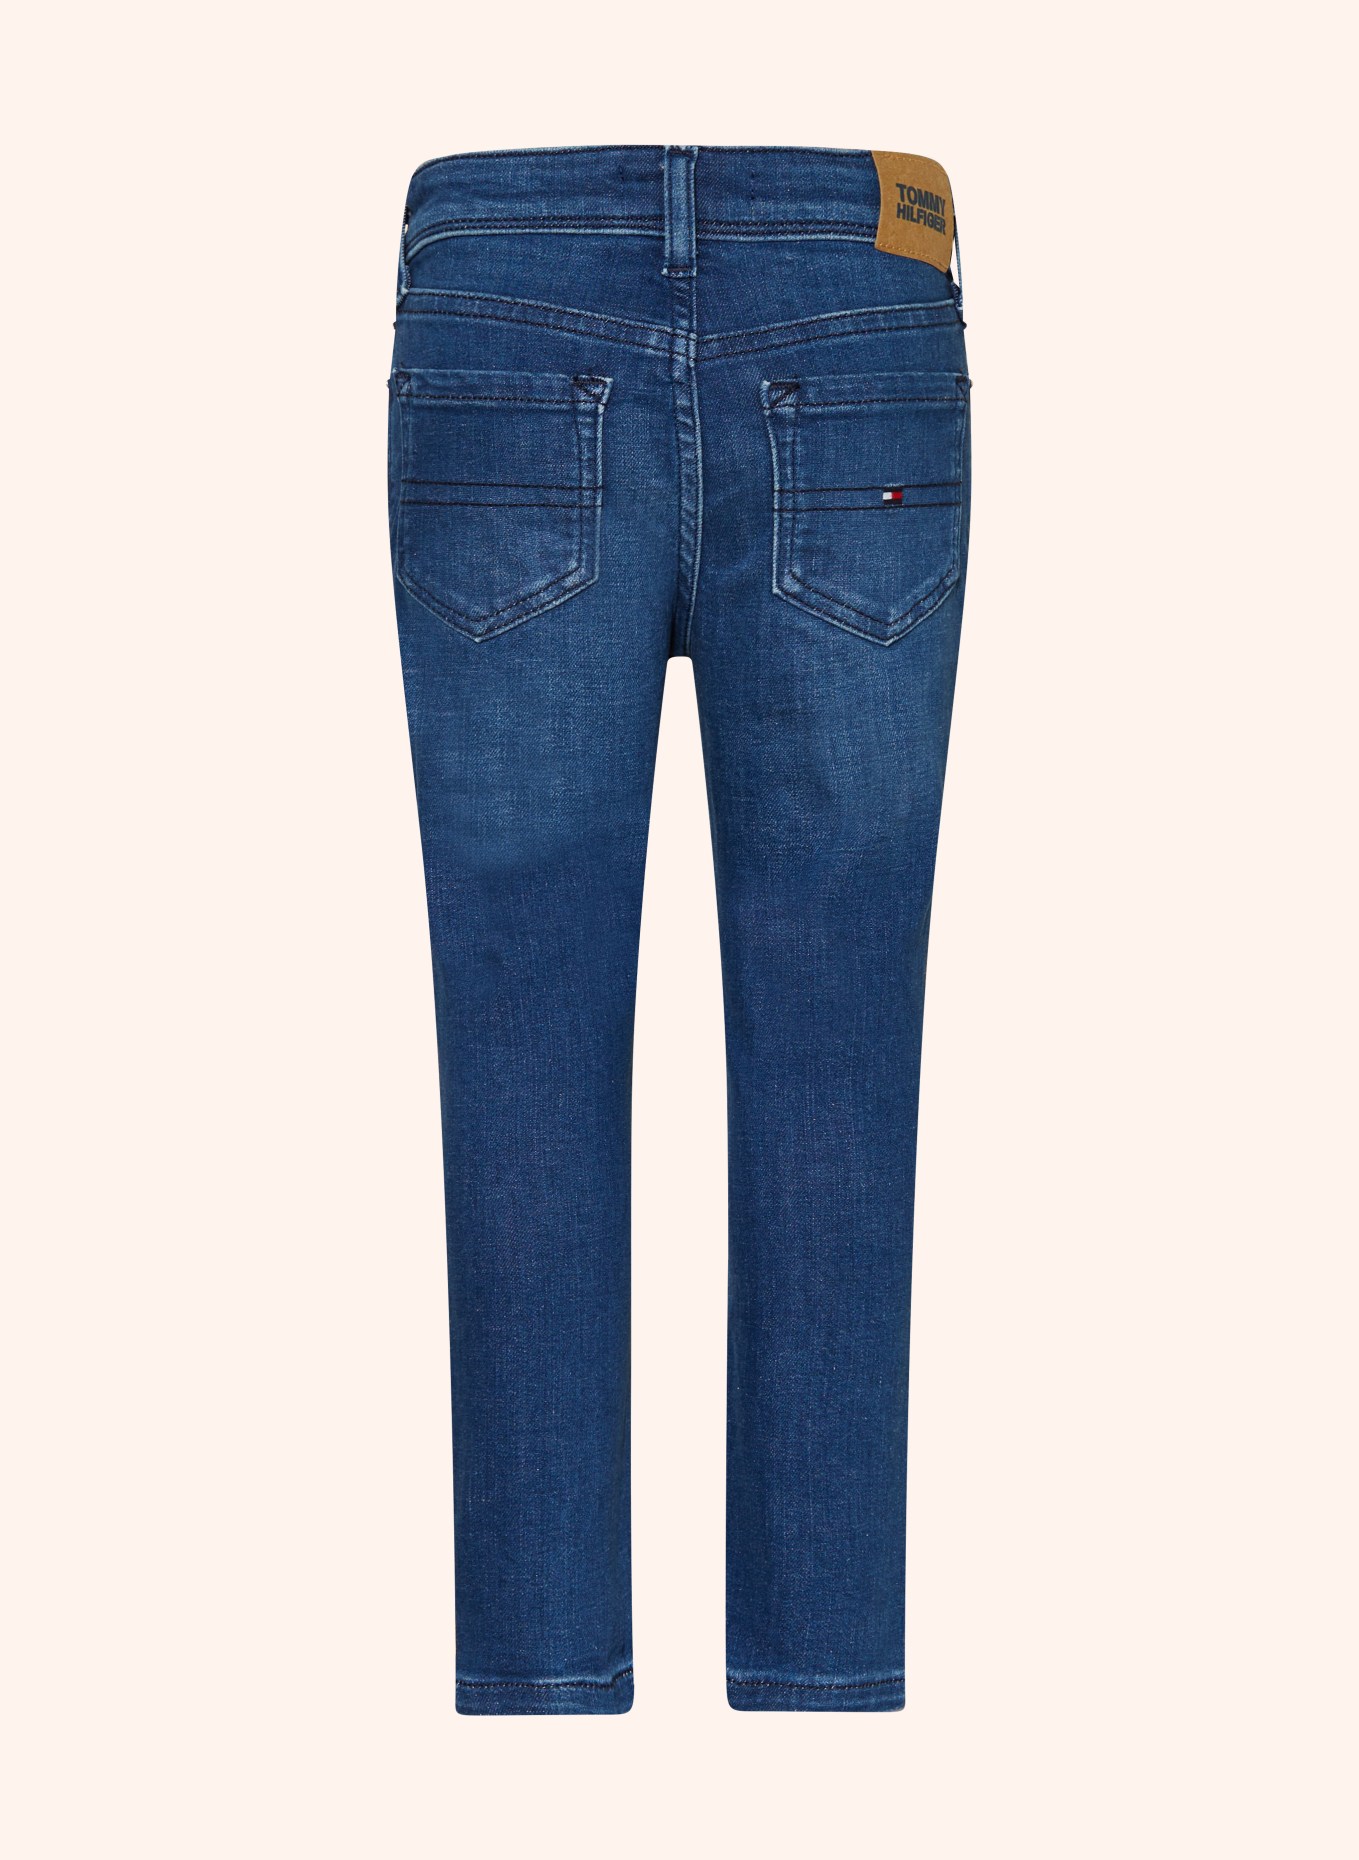 TOMMY HILFIGER Jeans SCANTON Slim Fit, Farbe: 1A5 Reinardbluedk (Bild 2)